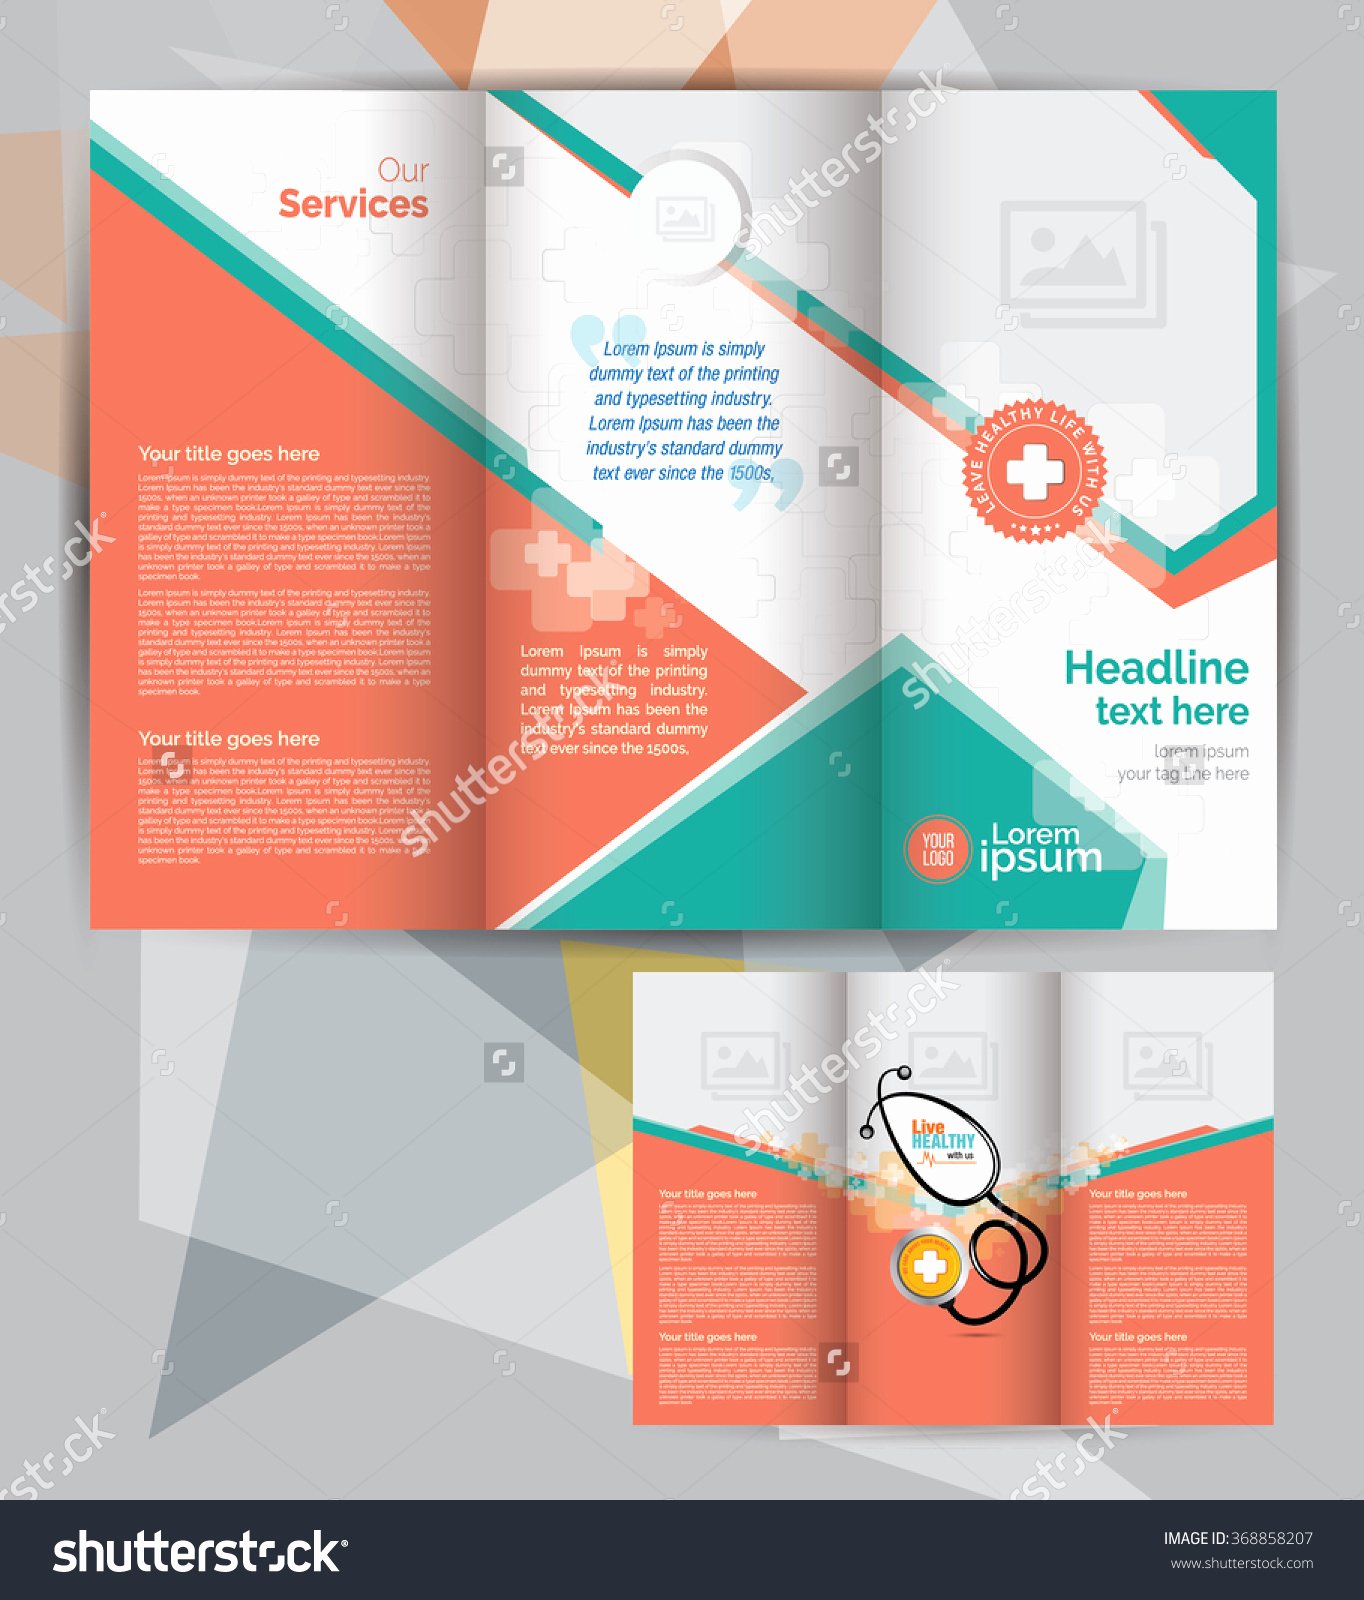 Free Medical Brochure Templates Portablegasgrillweber